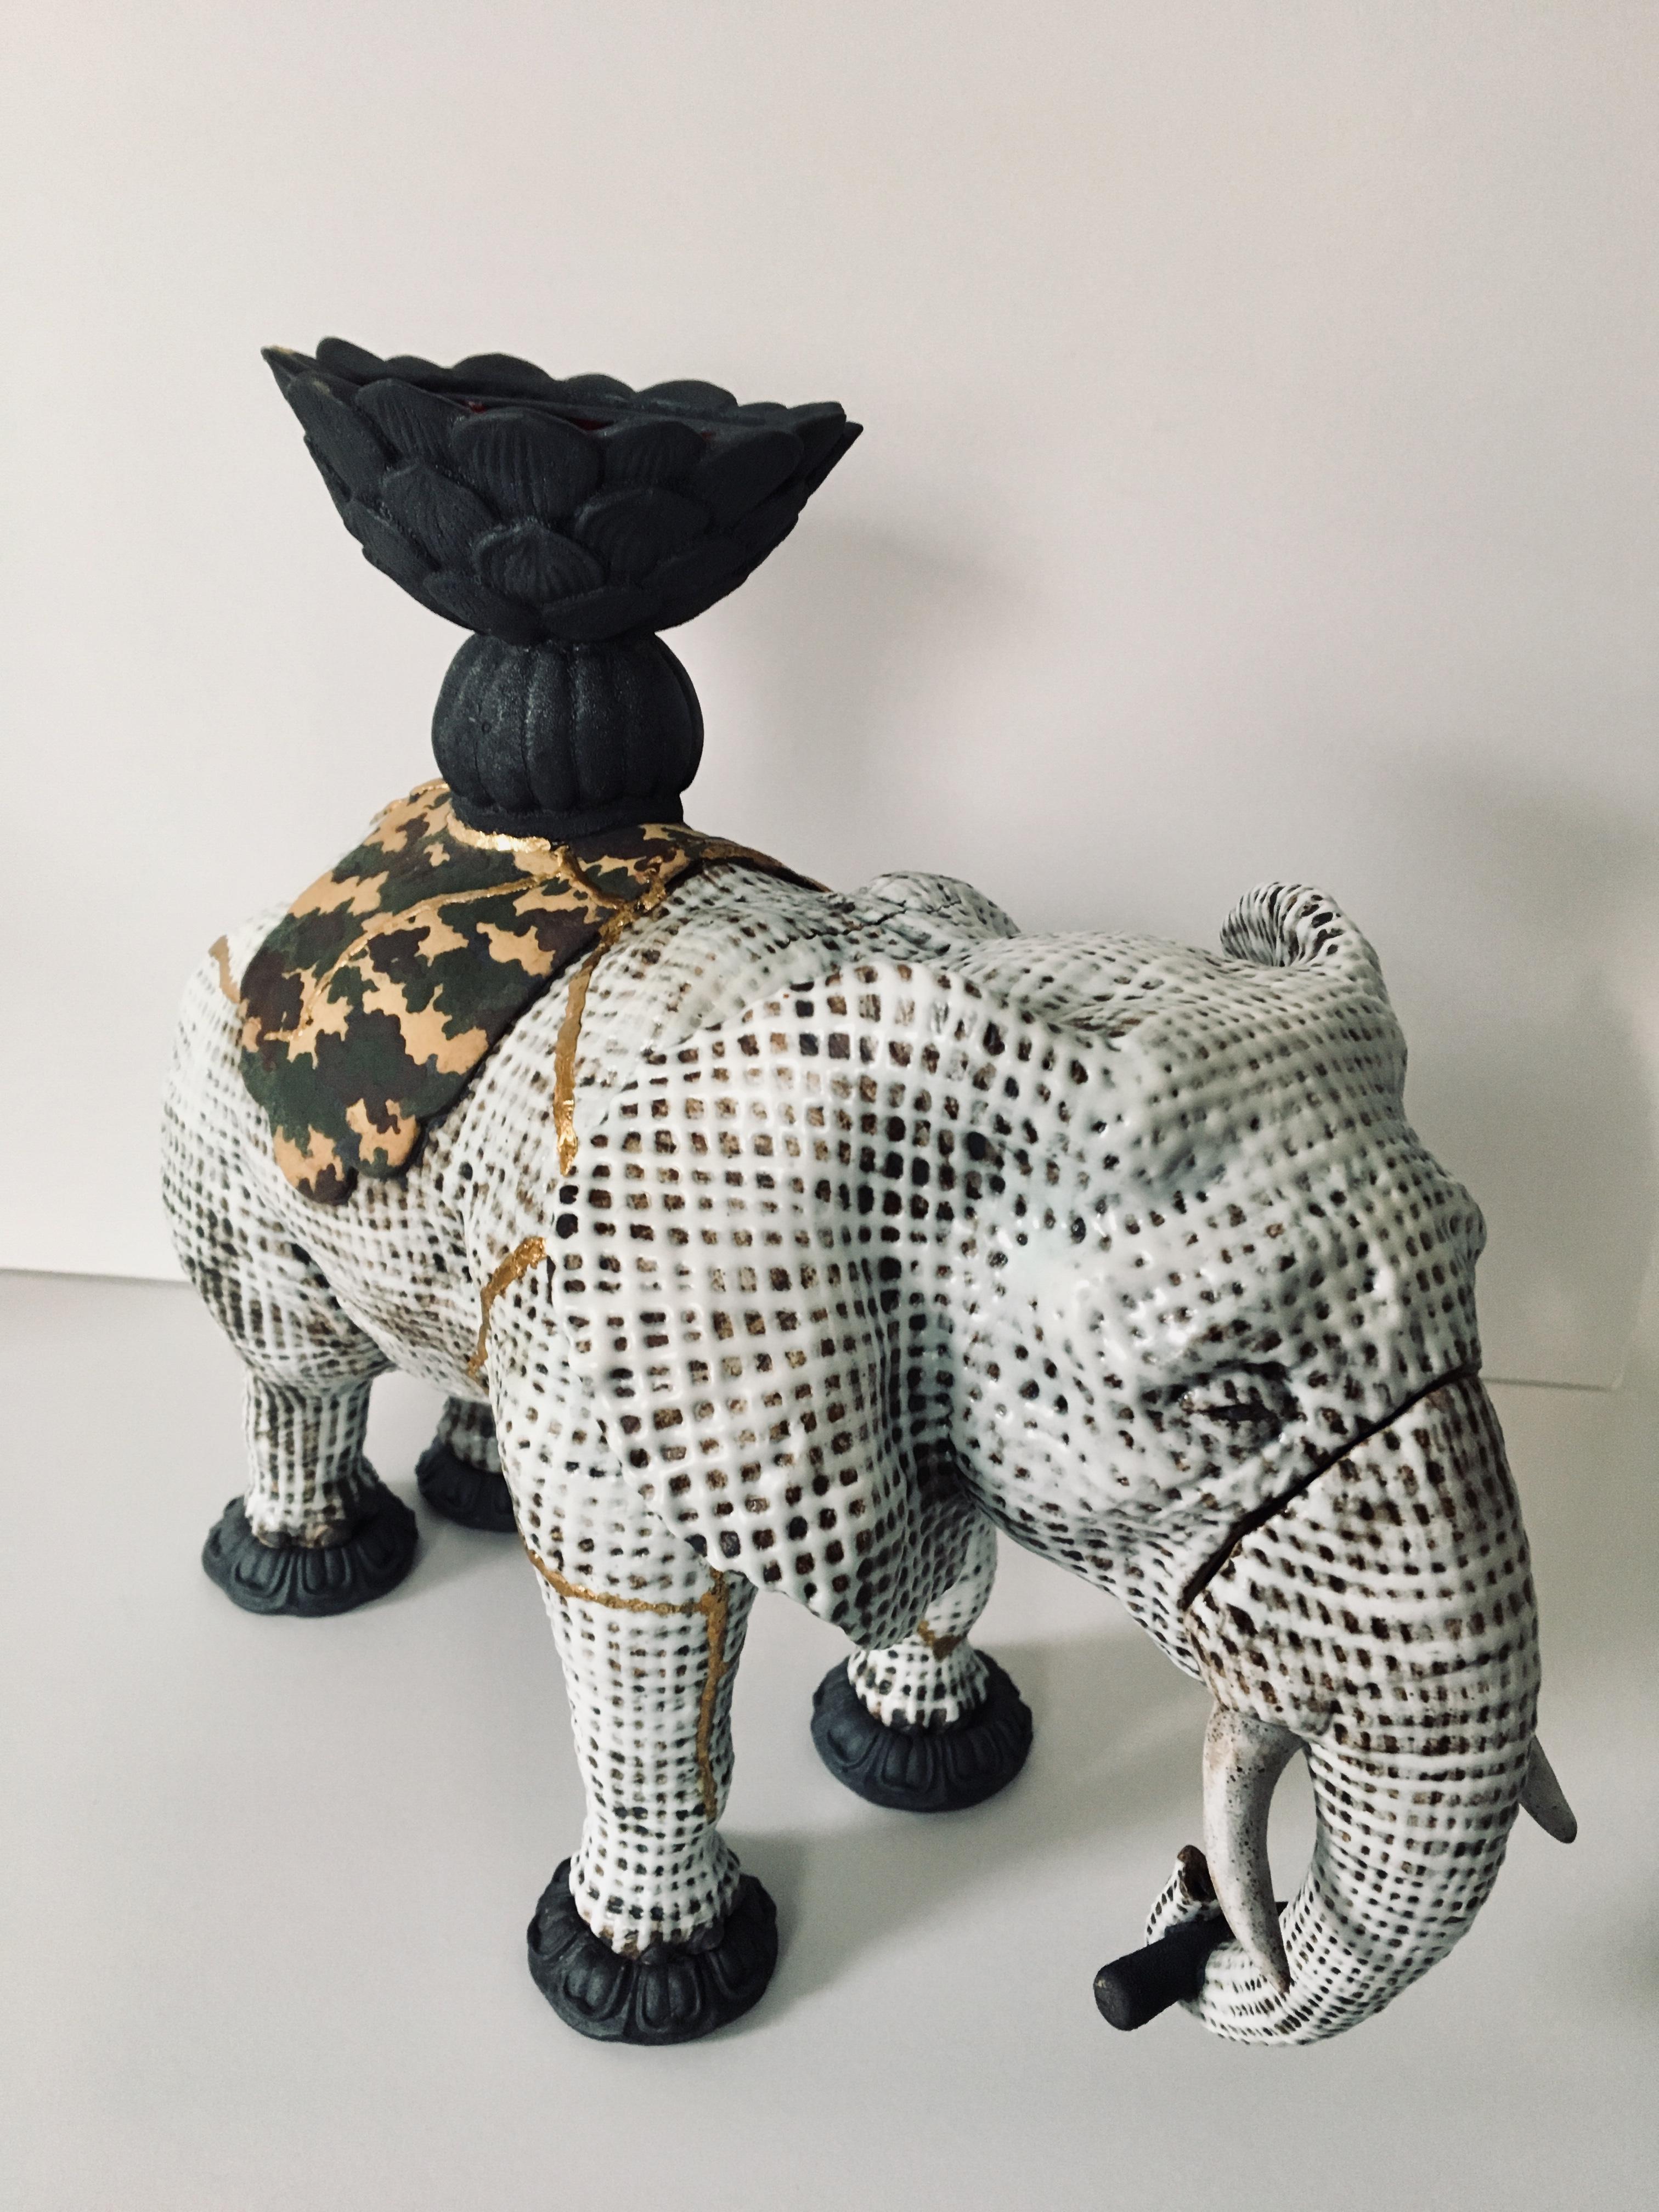 Ceramic Sculpture of elephant: 'Samantabhadra' (Sanskirt for Universal Worthy) - Gold Figurative Sculpture by Kenjiro Kitade